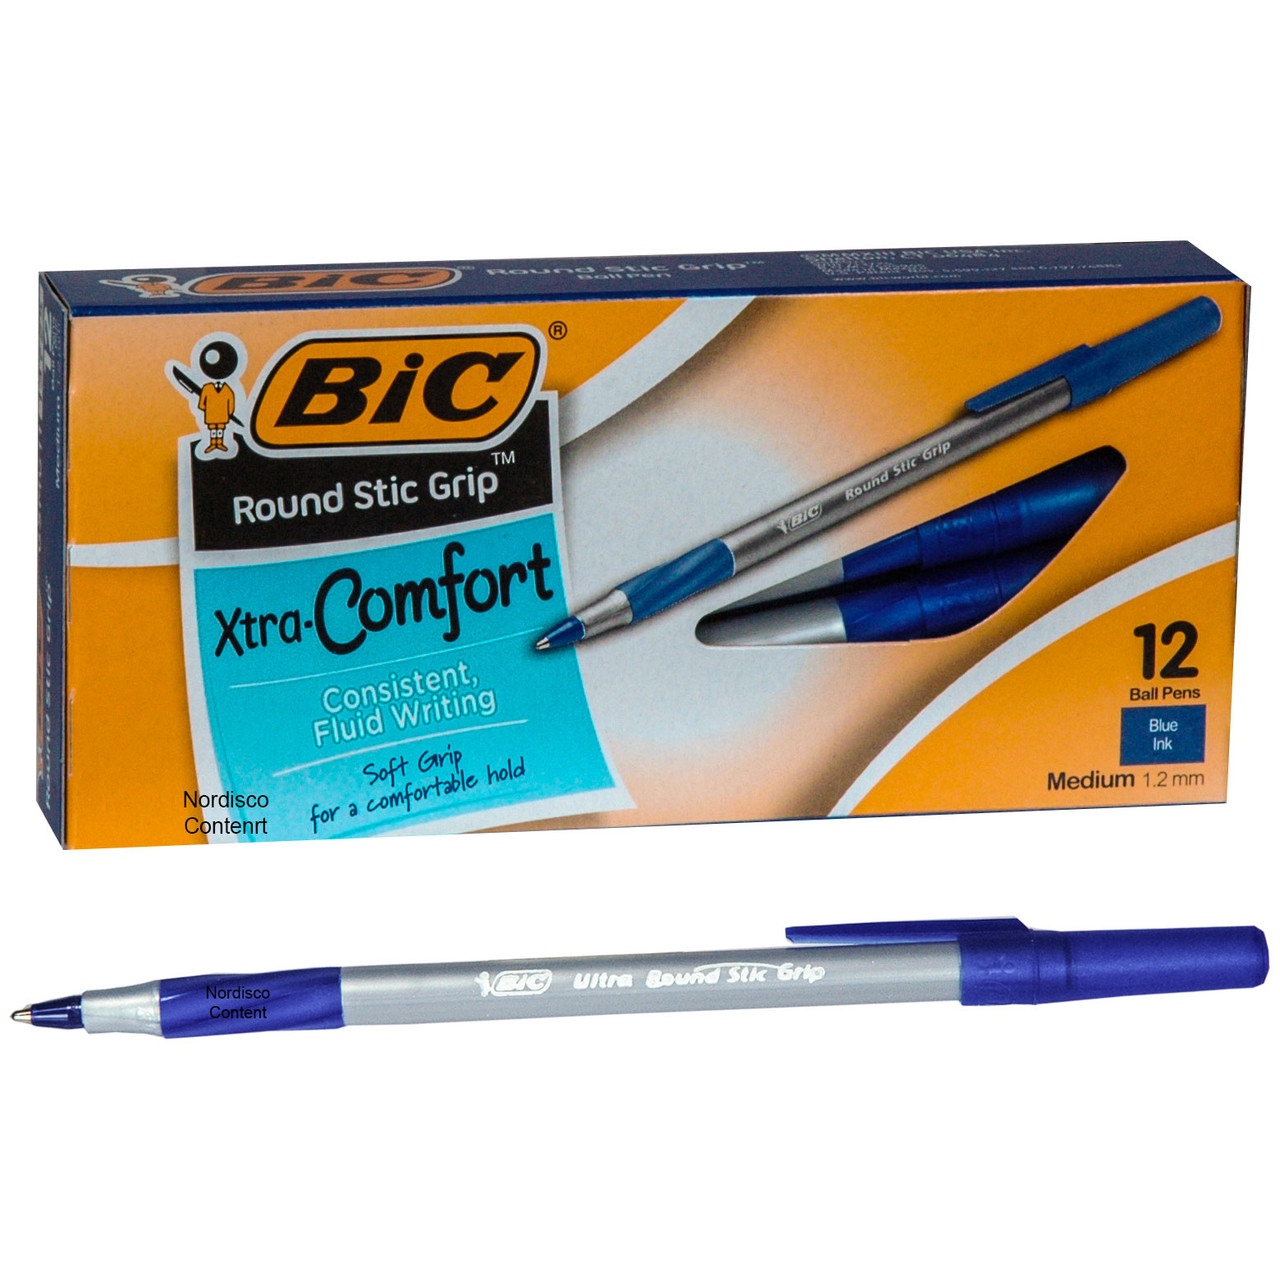 BIC GSMG11 13725 Blue Ultra Round Stic Grip Pen, 1.2 mm Medium